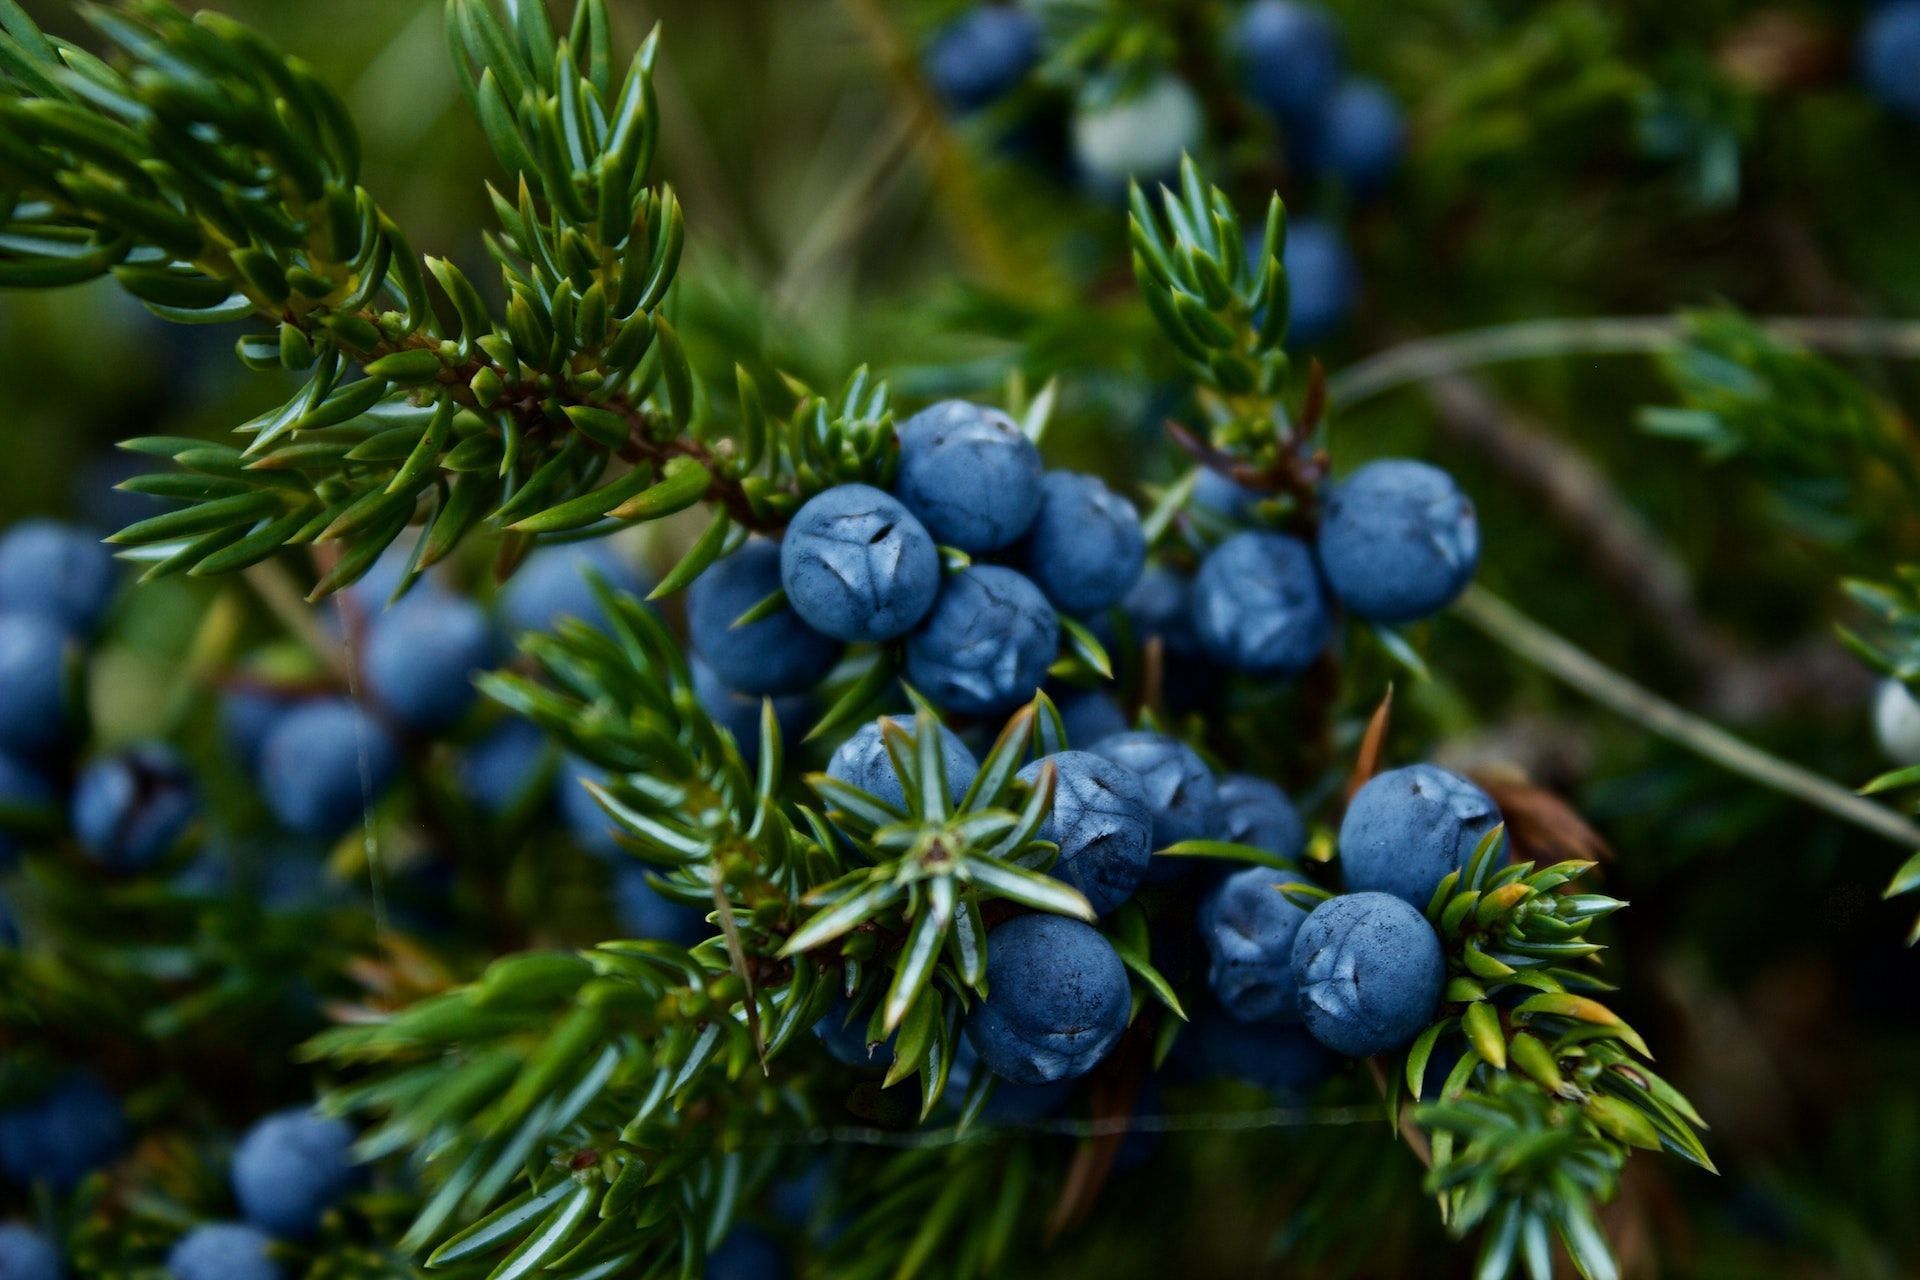 Blueberries promote skin health. (Photo via Pexels/kristen munk)